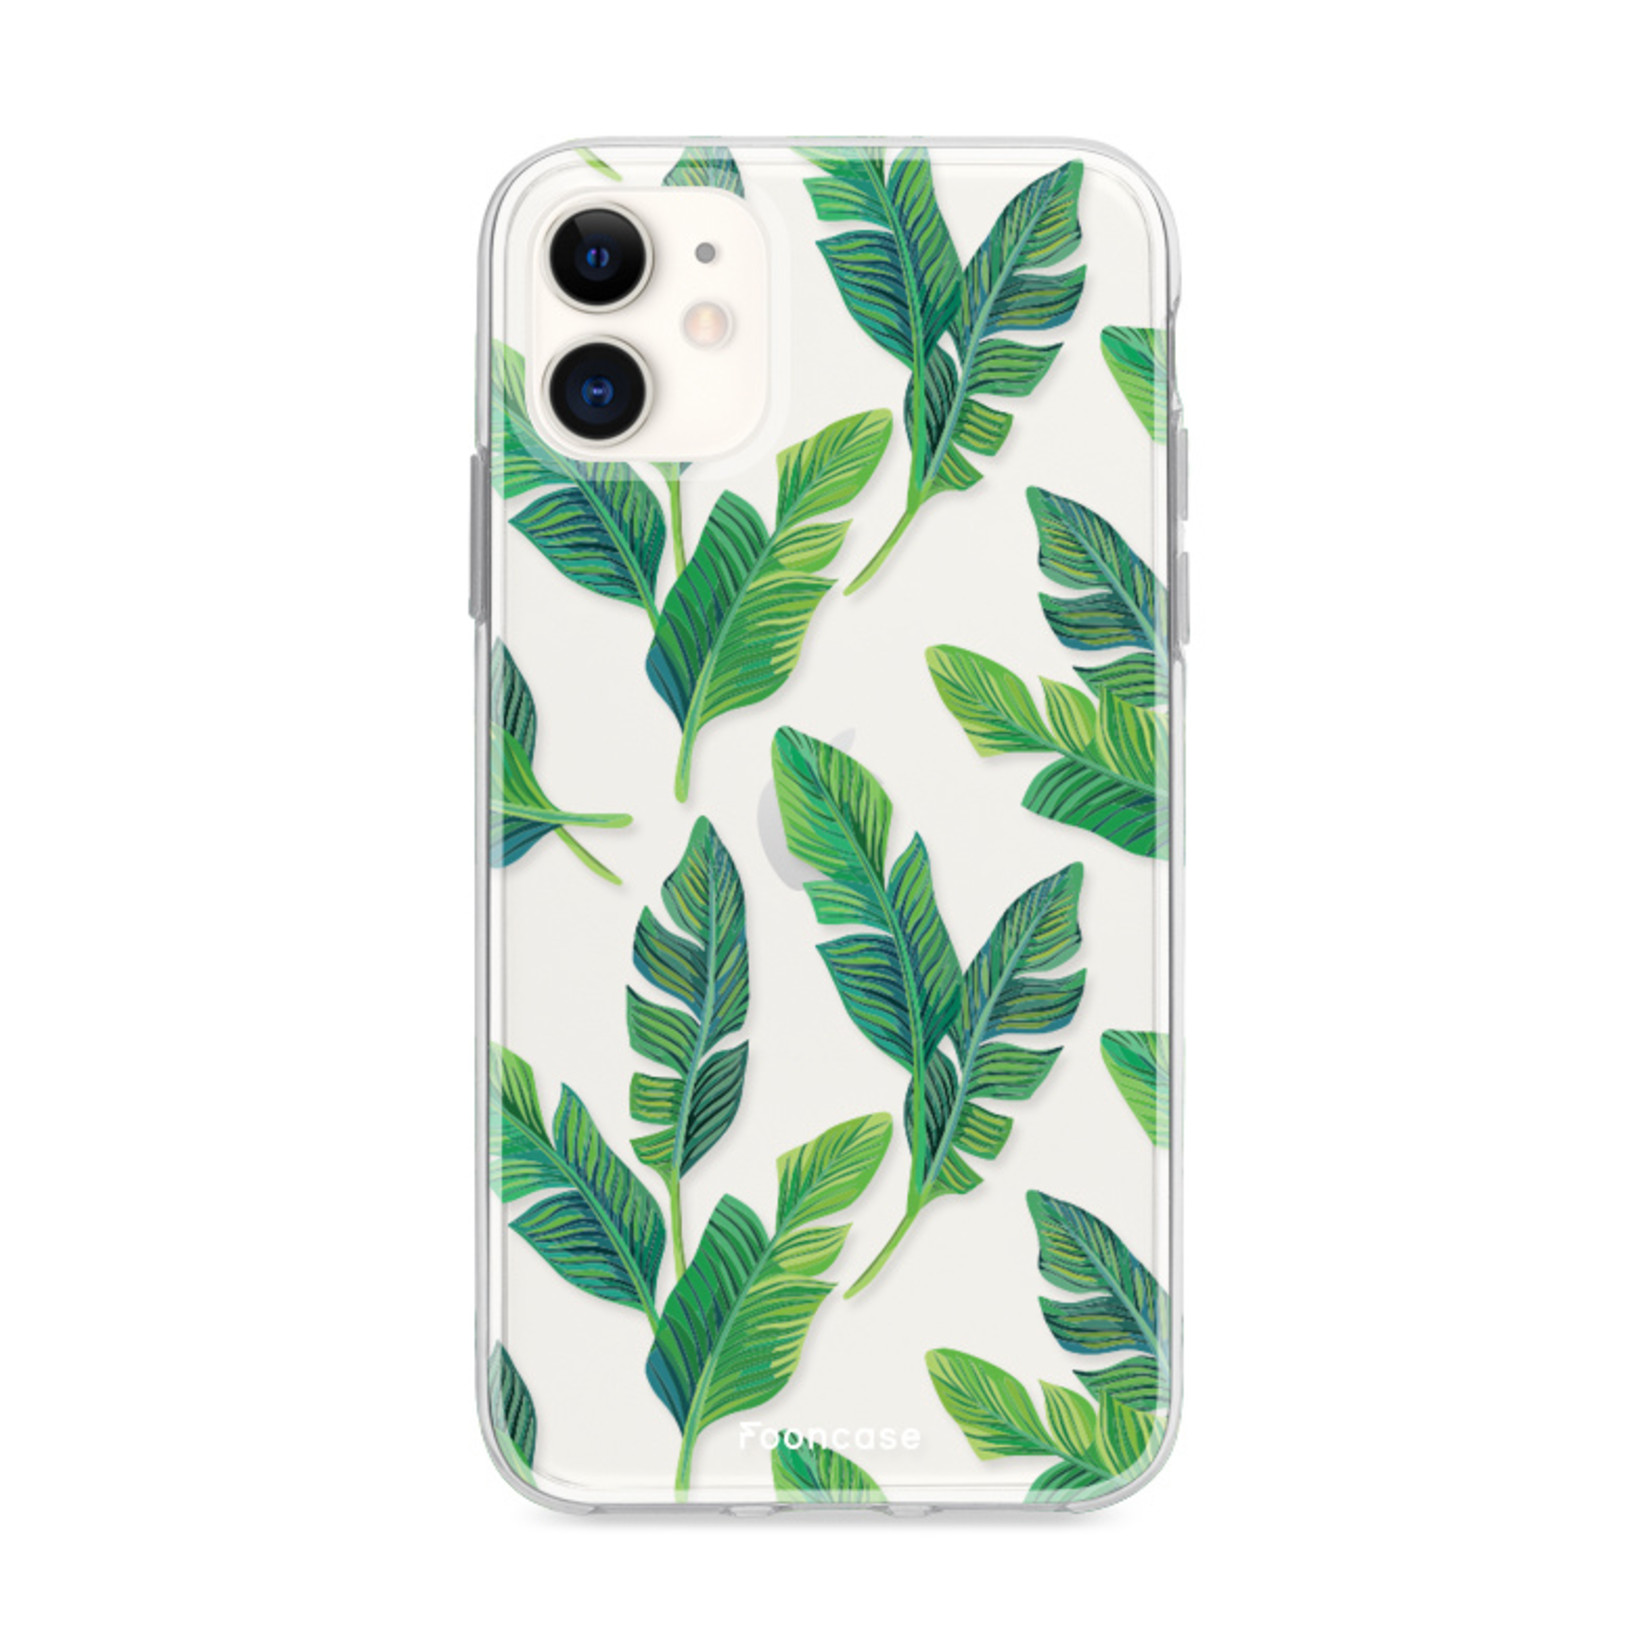 FOONCASE iPhone 12 hoesje TPU Soft Case - Back Cover - Banana leaves / Bananen bladeren